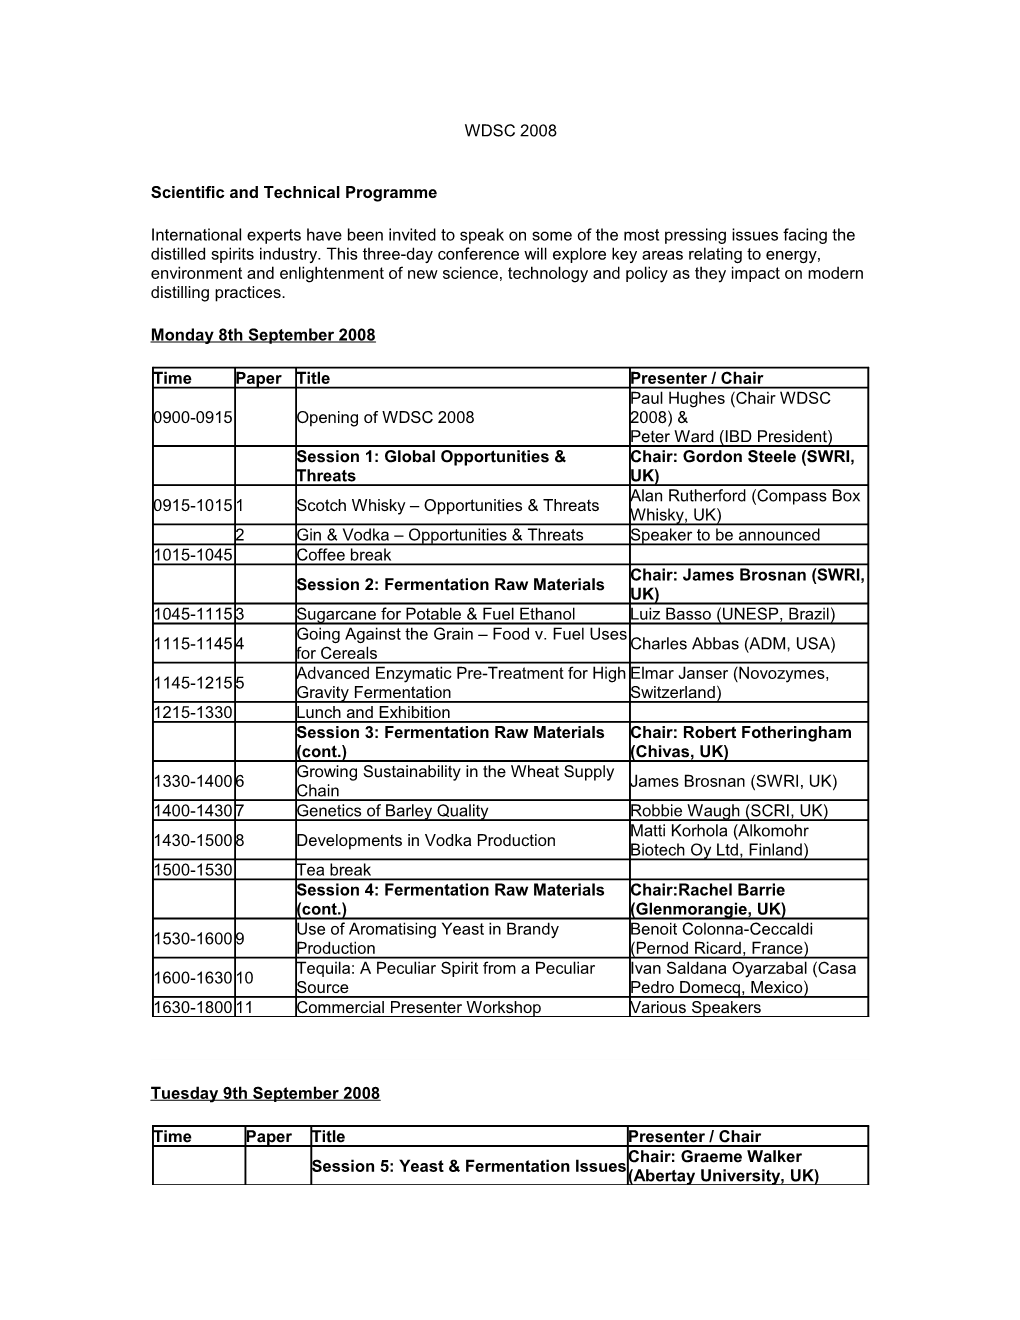 WDSC 2008 - Scientific and Technical Programme